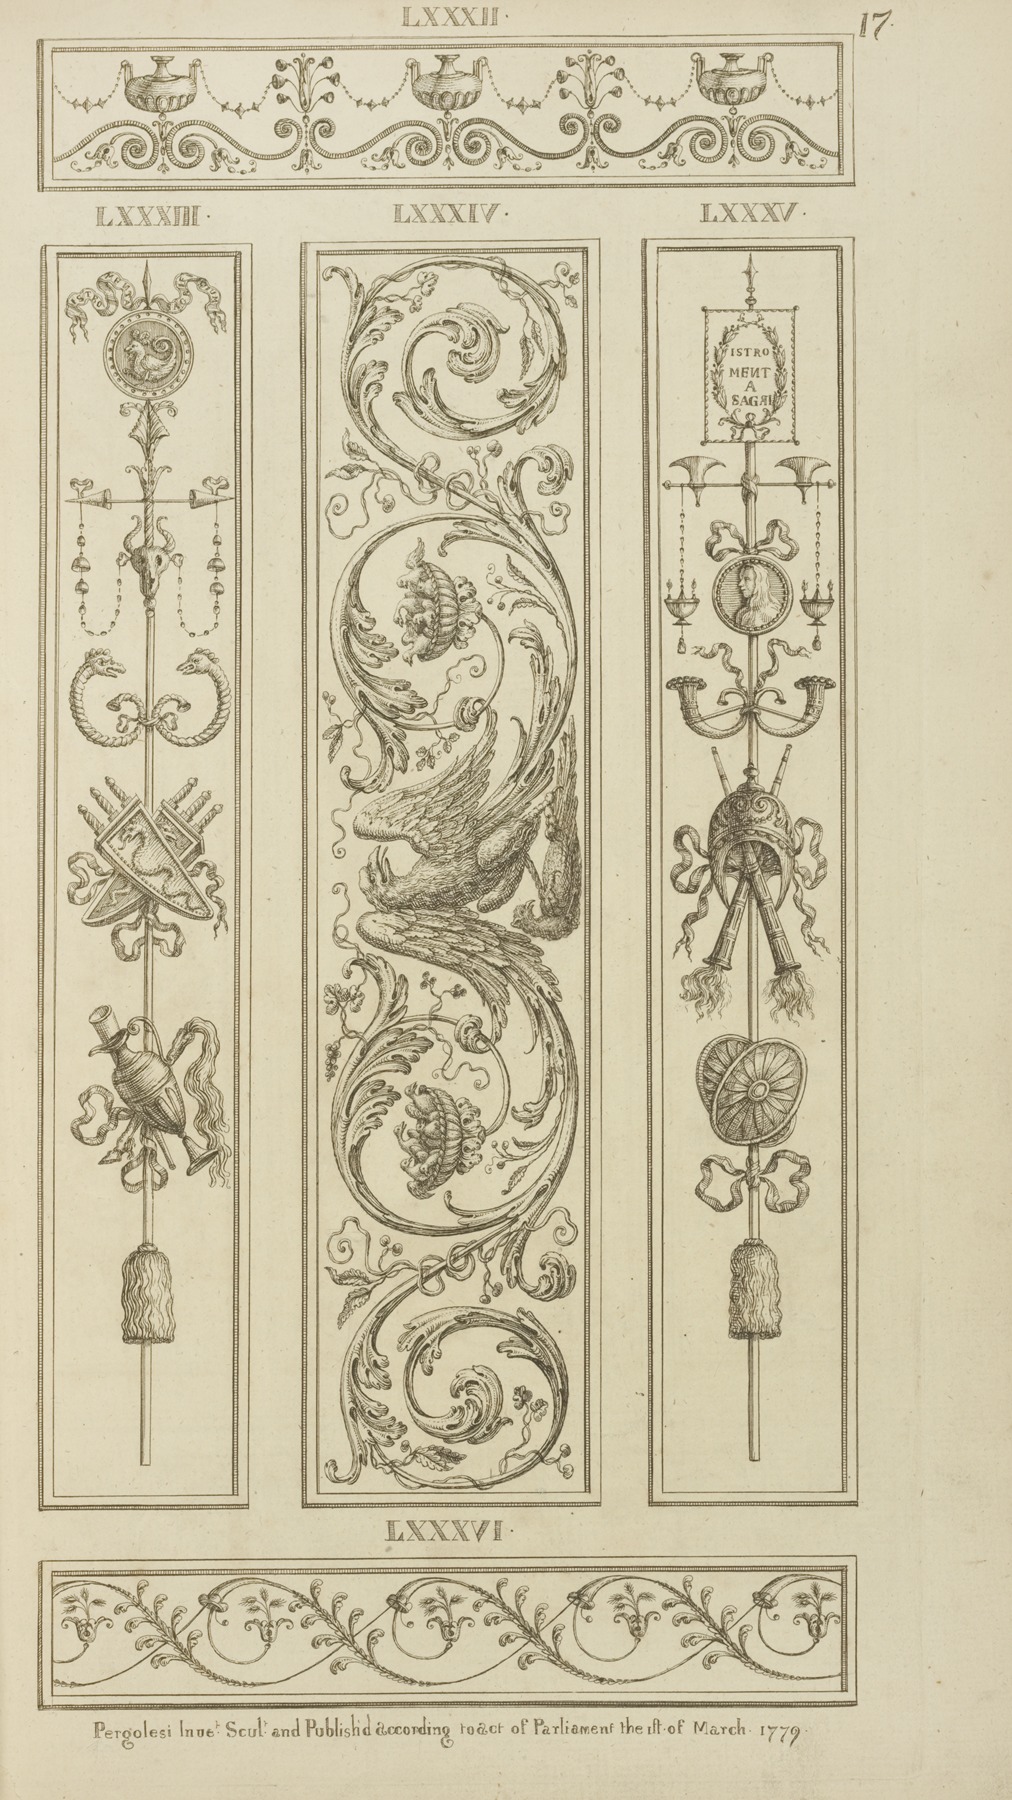 Michel Angelo Pergolesi - Central ornamental design of eagle with vegetal shapes.